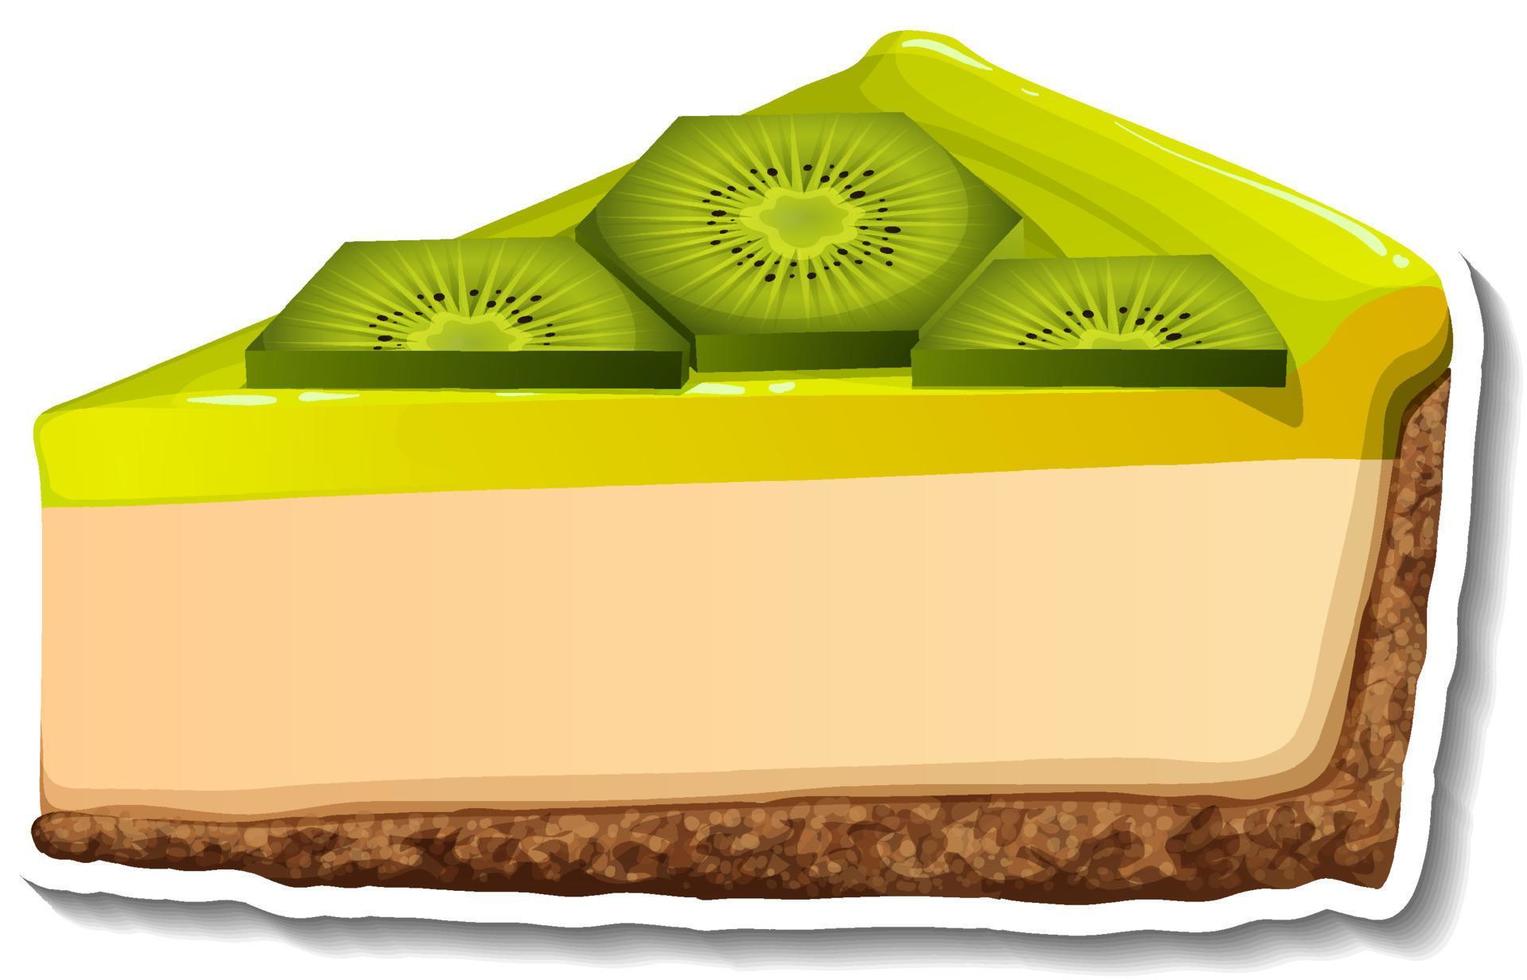 A piece of kiwi cheesecake in cartoon style vector